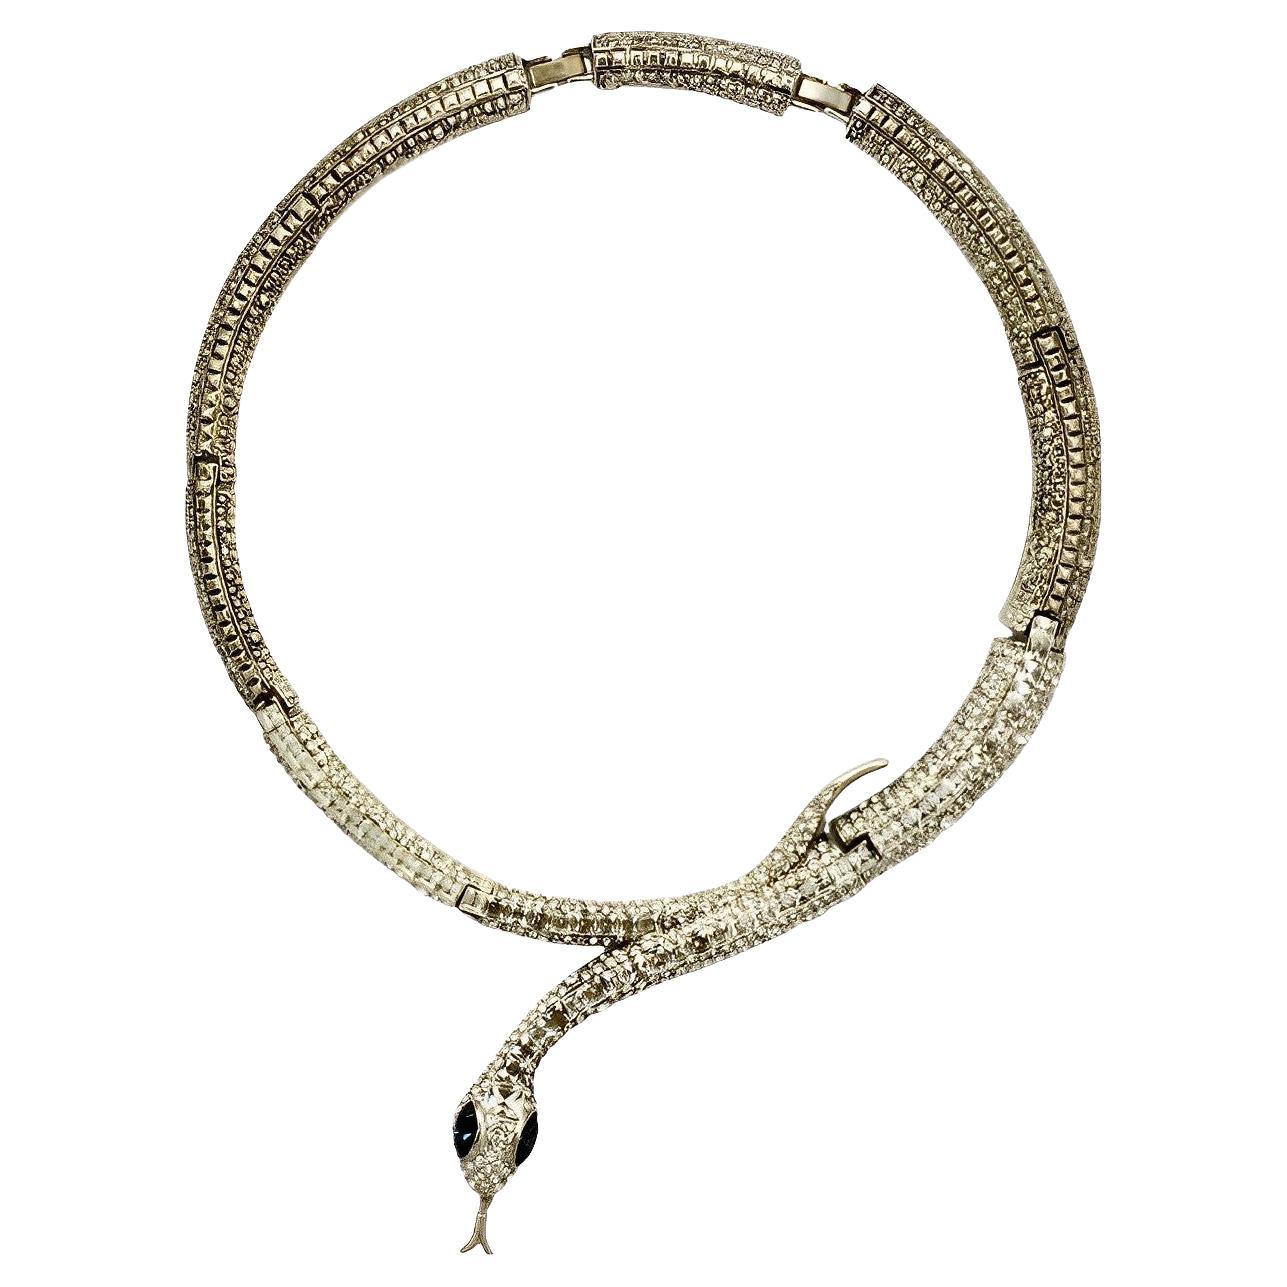 Silver Tone Black Enamel and Rhinestones Snake Link Collar Necklace